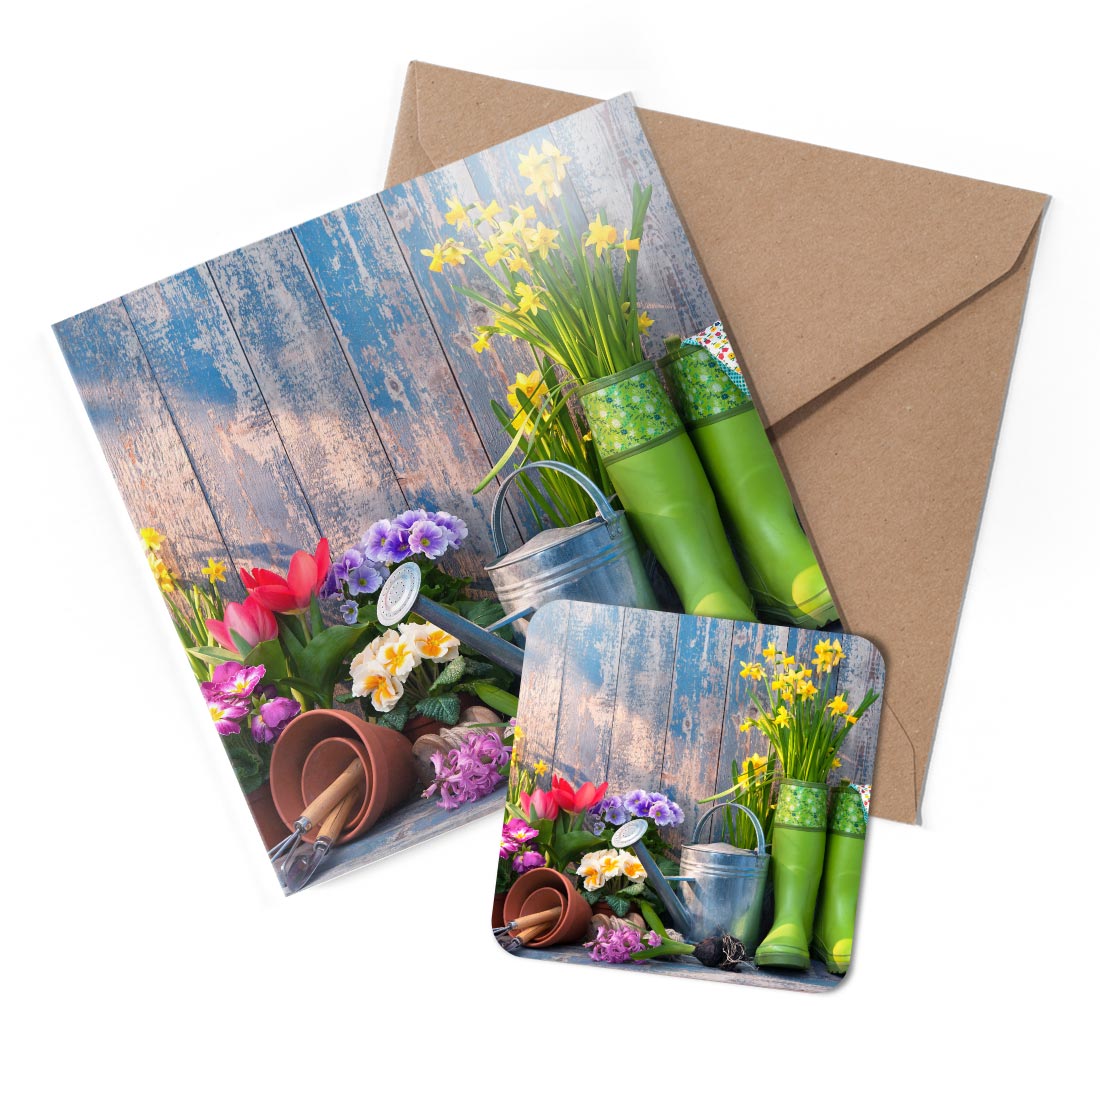 1 x Greeting Card & Coaster Set - Gardening Tools Flowers Garden Art #50998